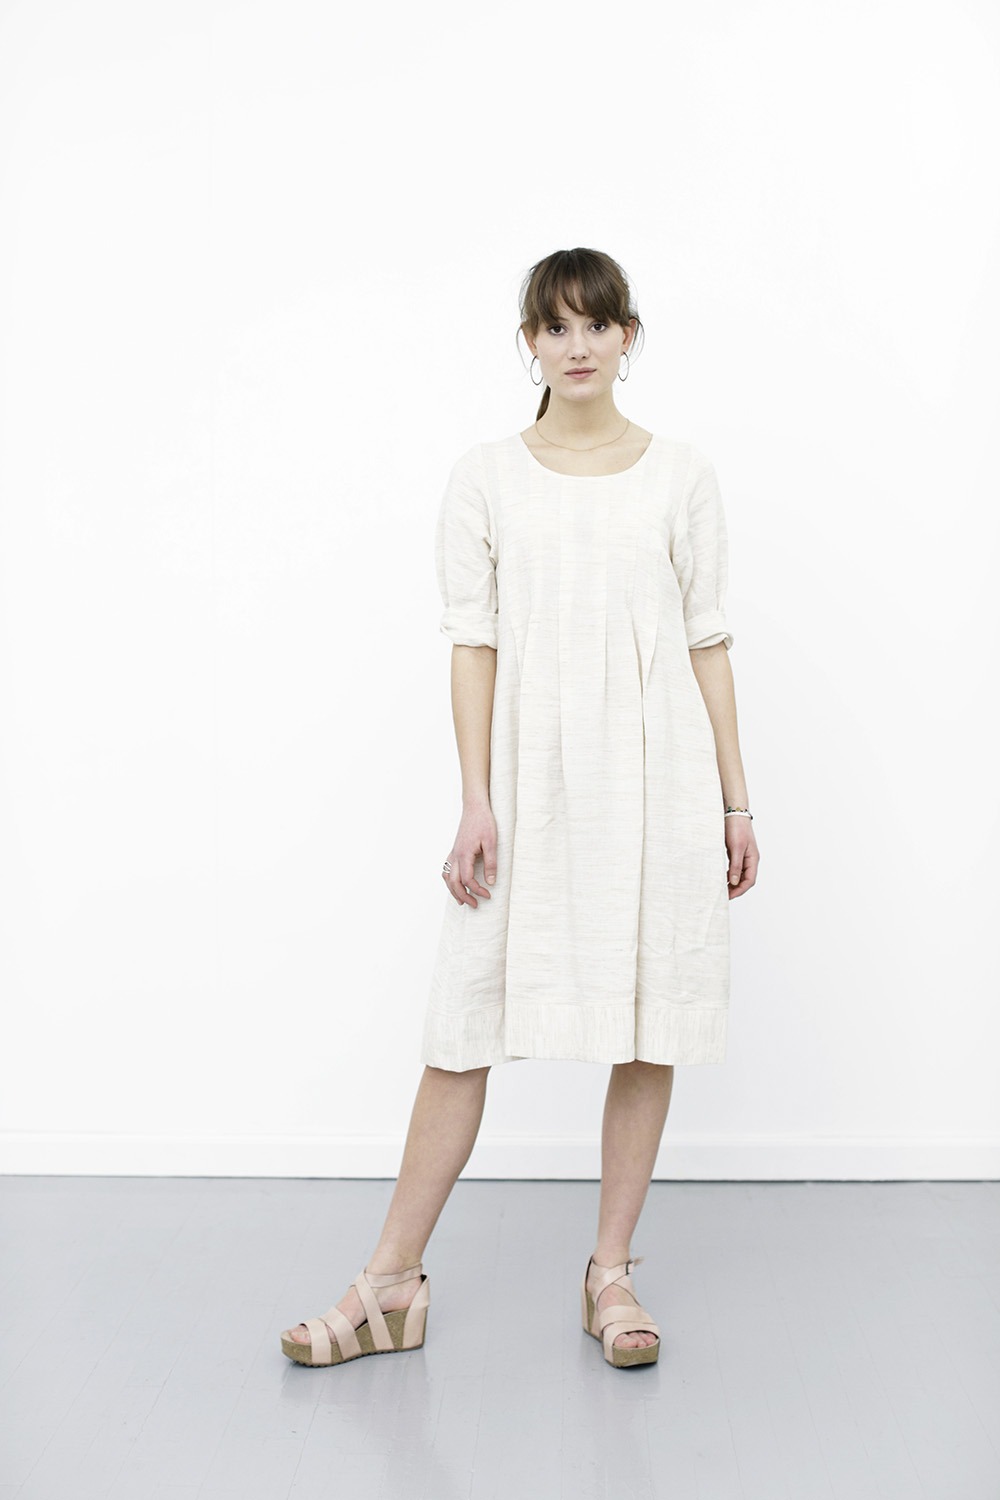 Anonym Repaste Compulsion Off-white dress | pleats | Mc726d | dress in linen and cotton on McVERDI